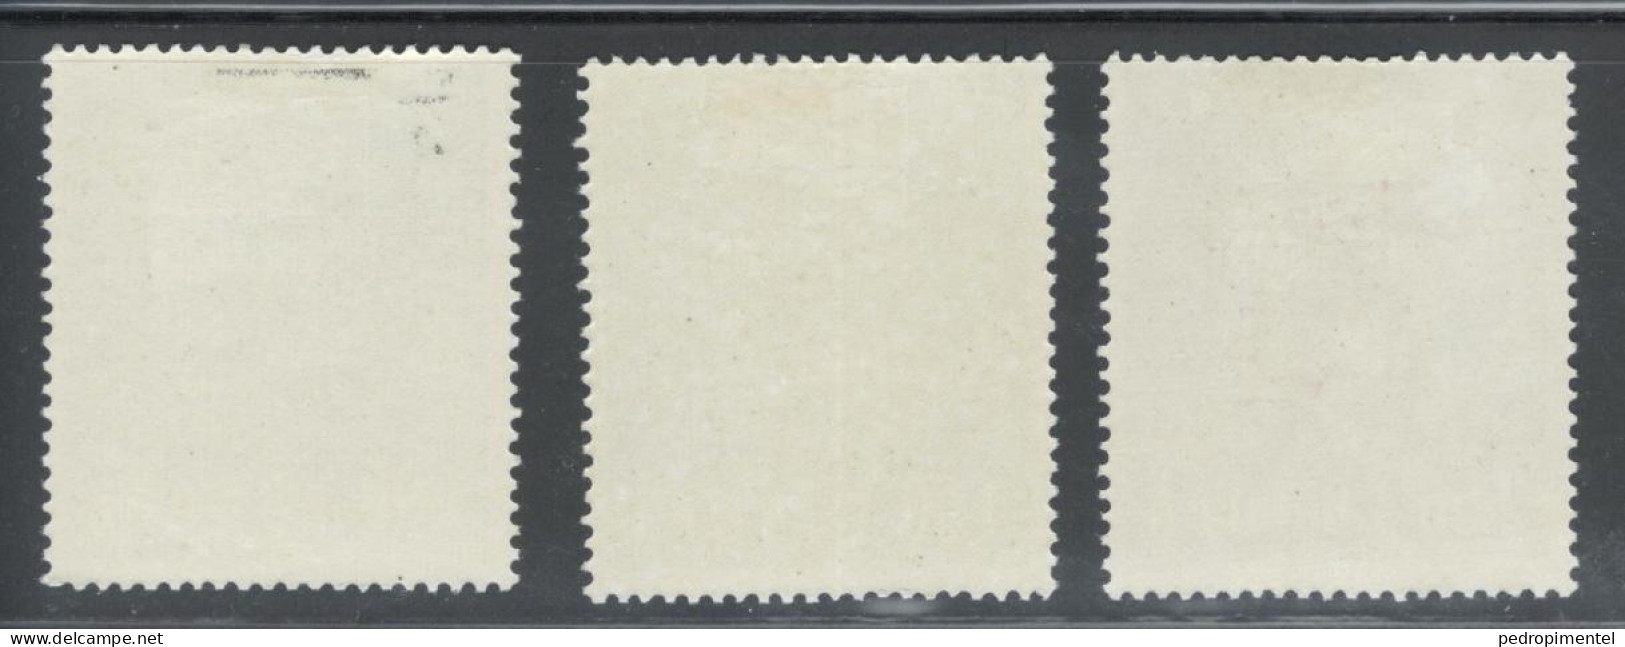 Portugal Stamps 1961 "Europa CEPT" Condition MNH #878-880 - Ungebraucht